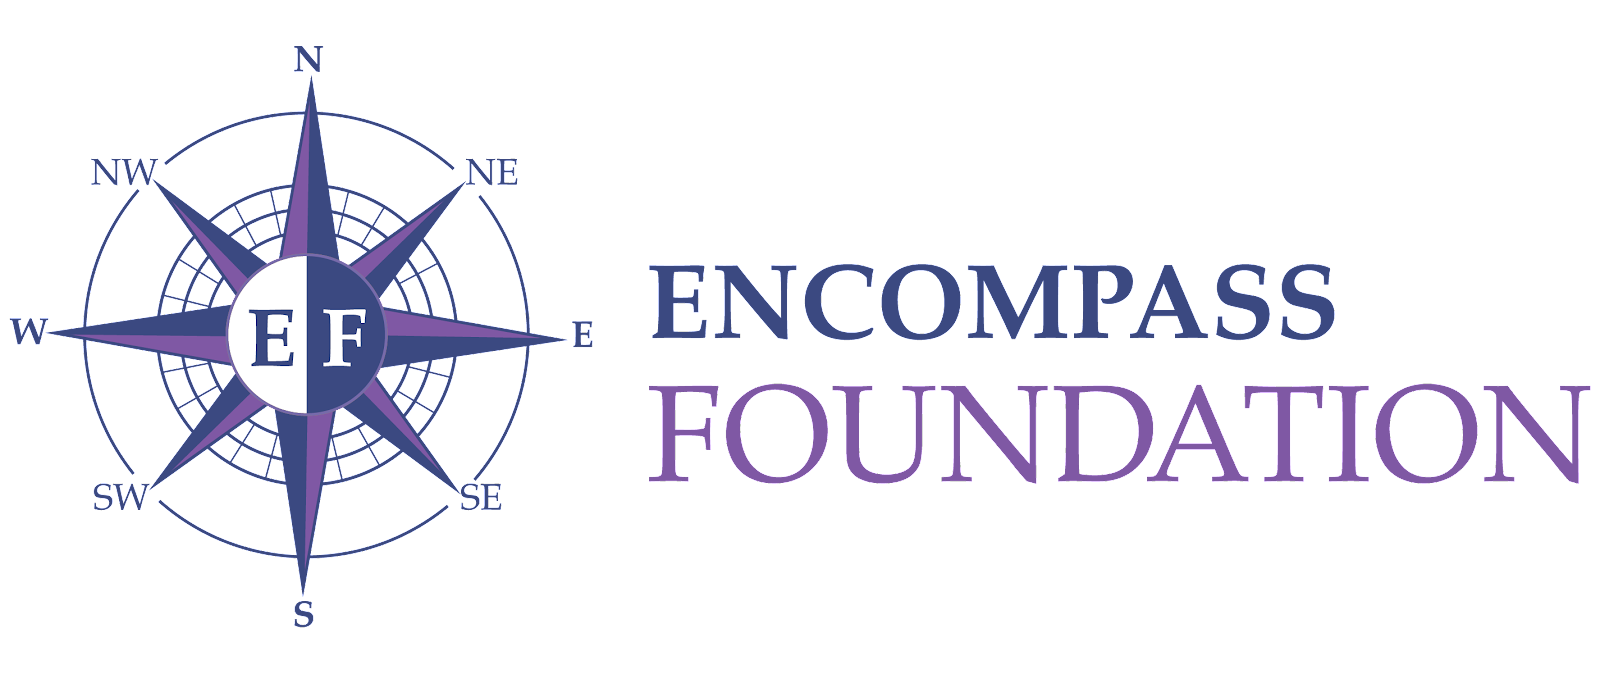 Encompass_Foundation_web_transparent.png